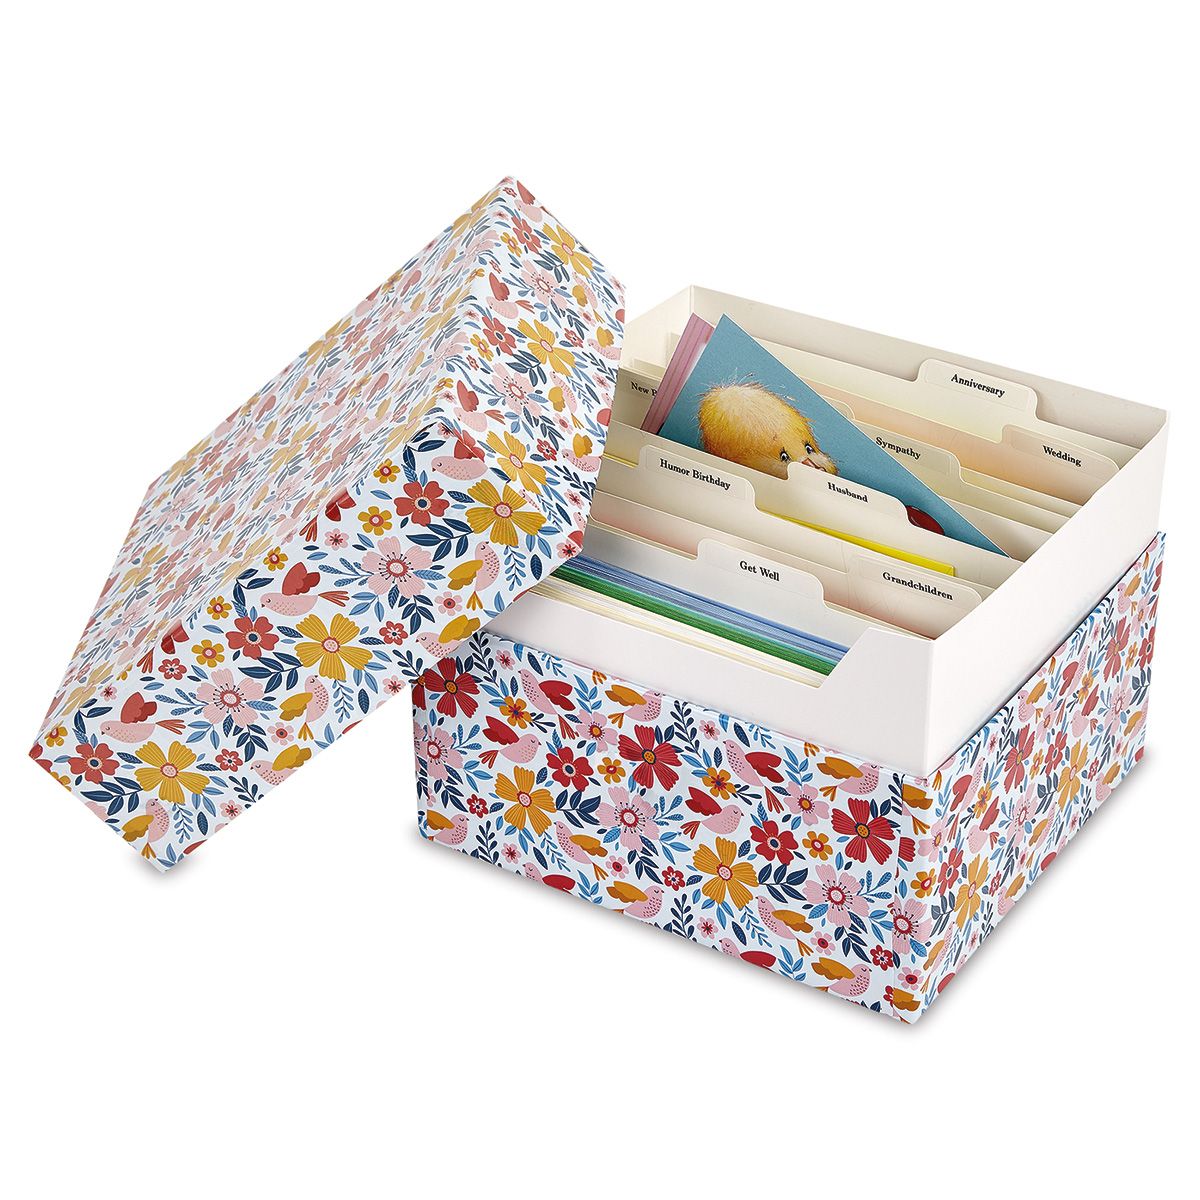 Blossom Top Greeting Card Organizer Box